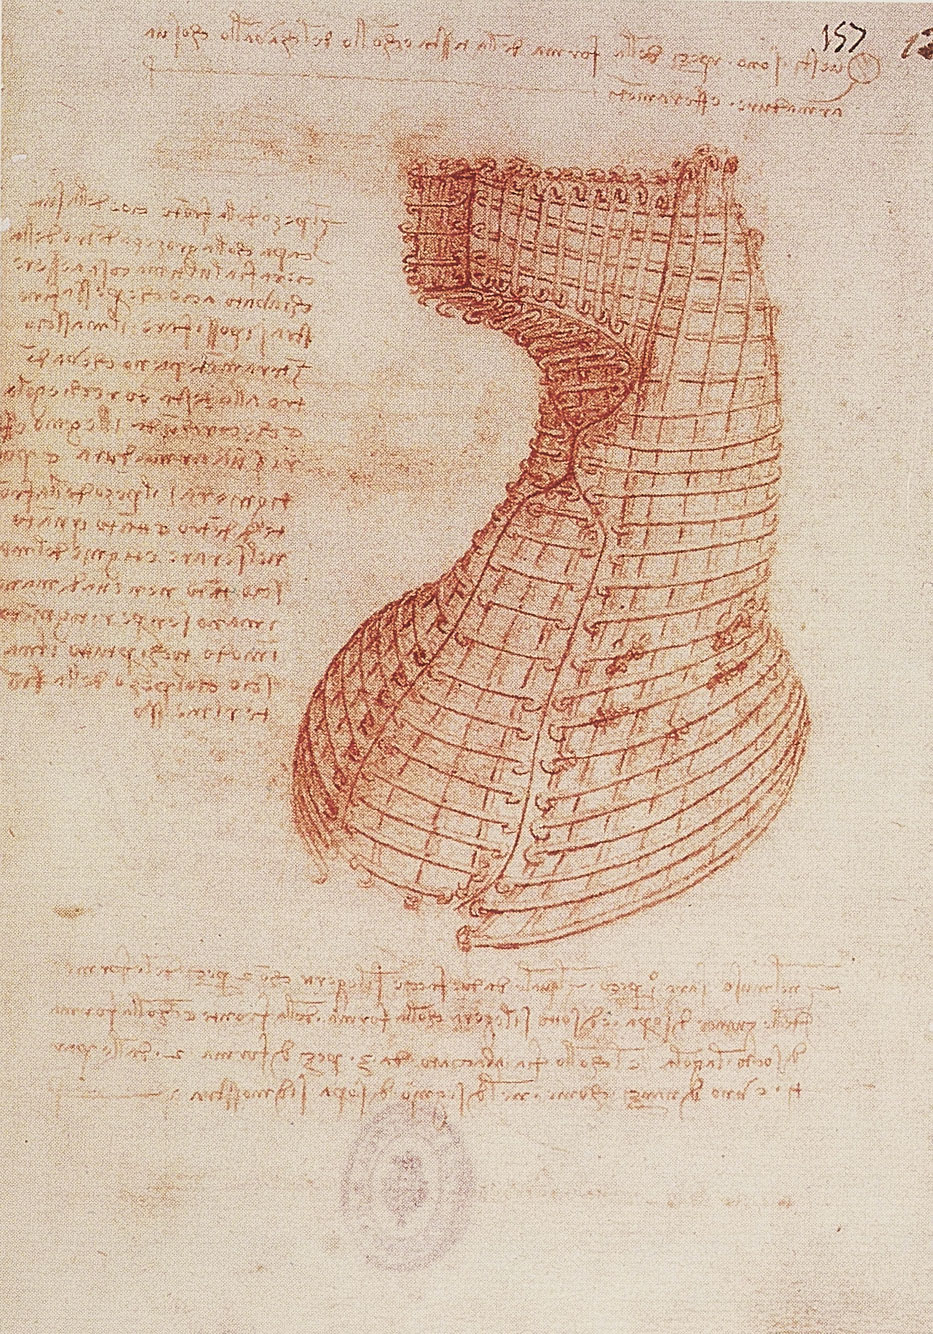 Leonardo's horseSan Siro